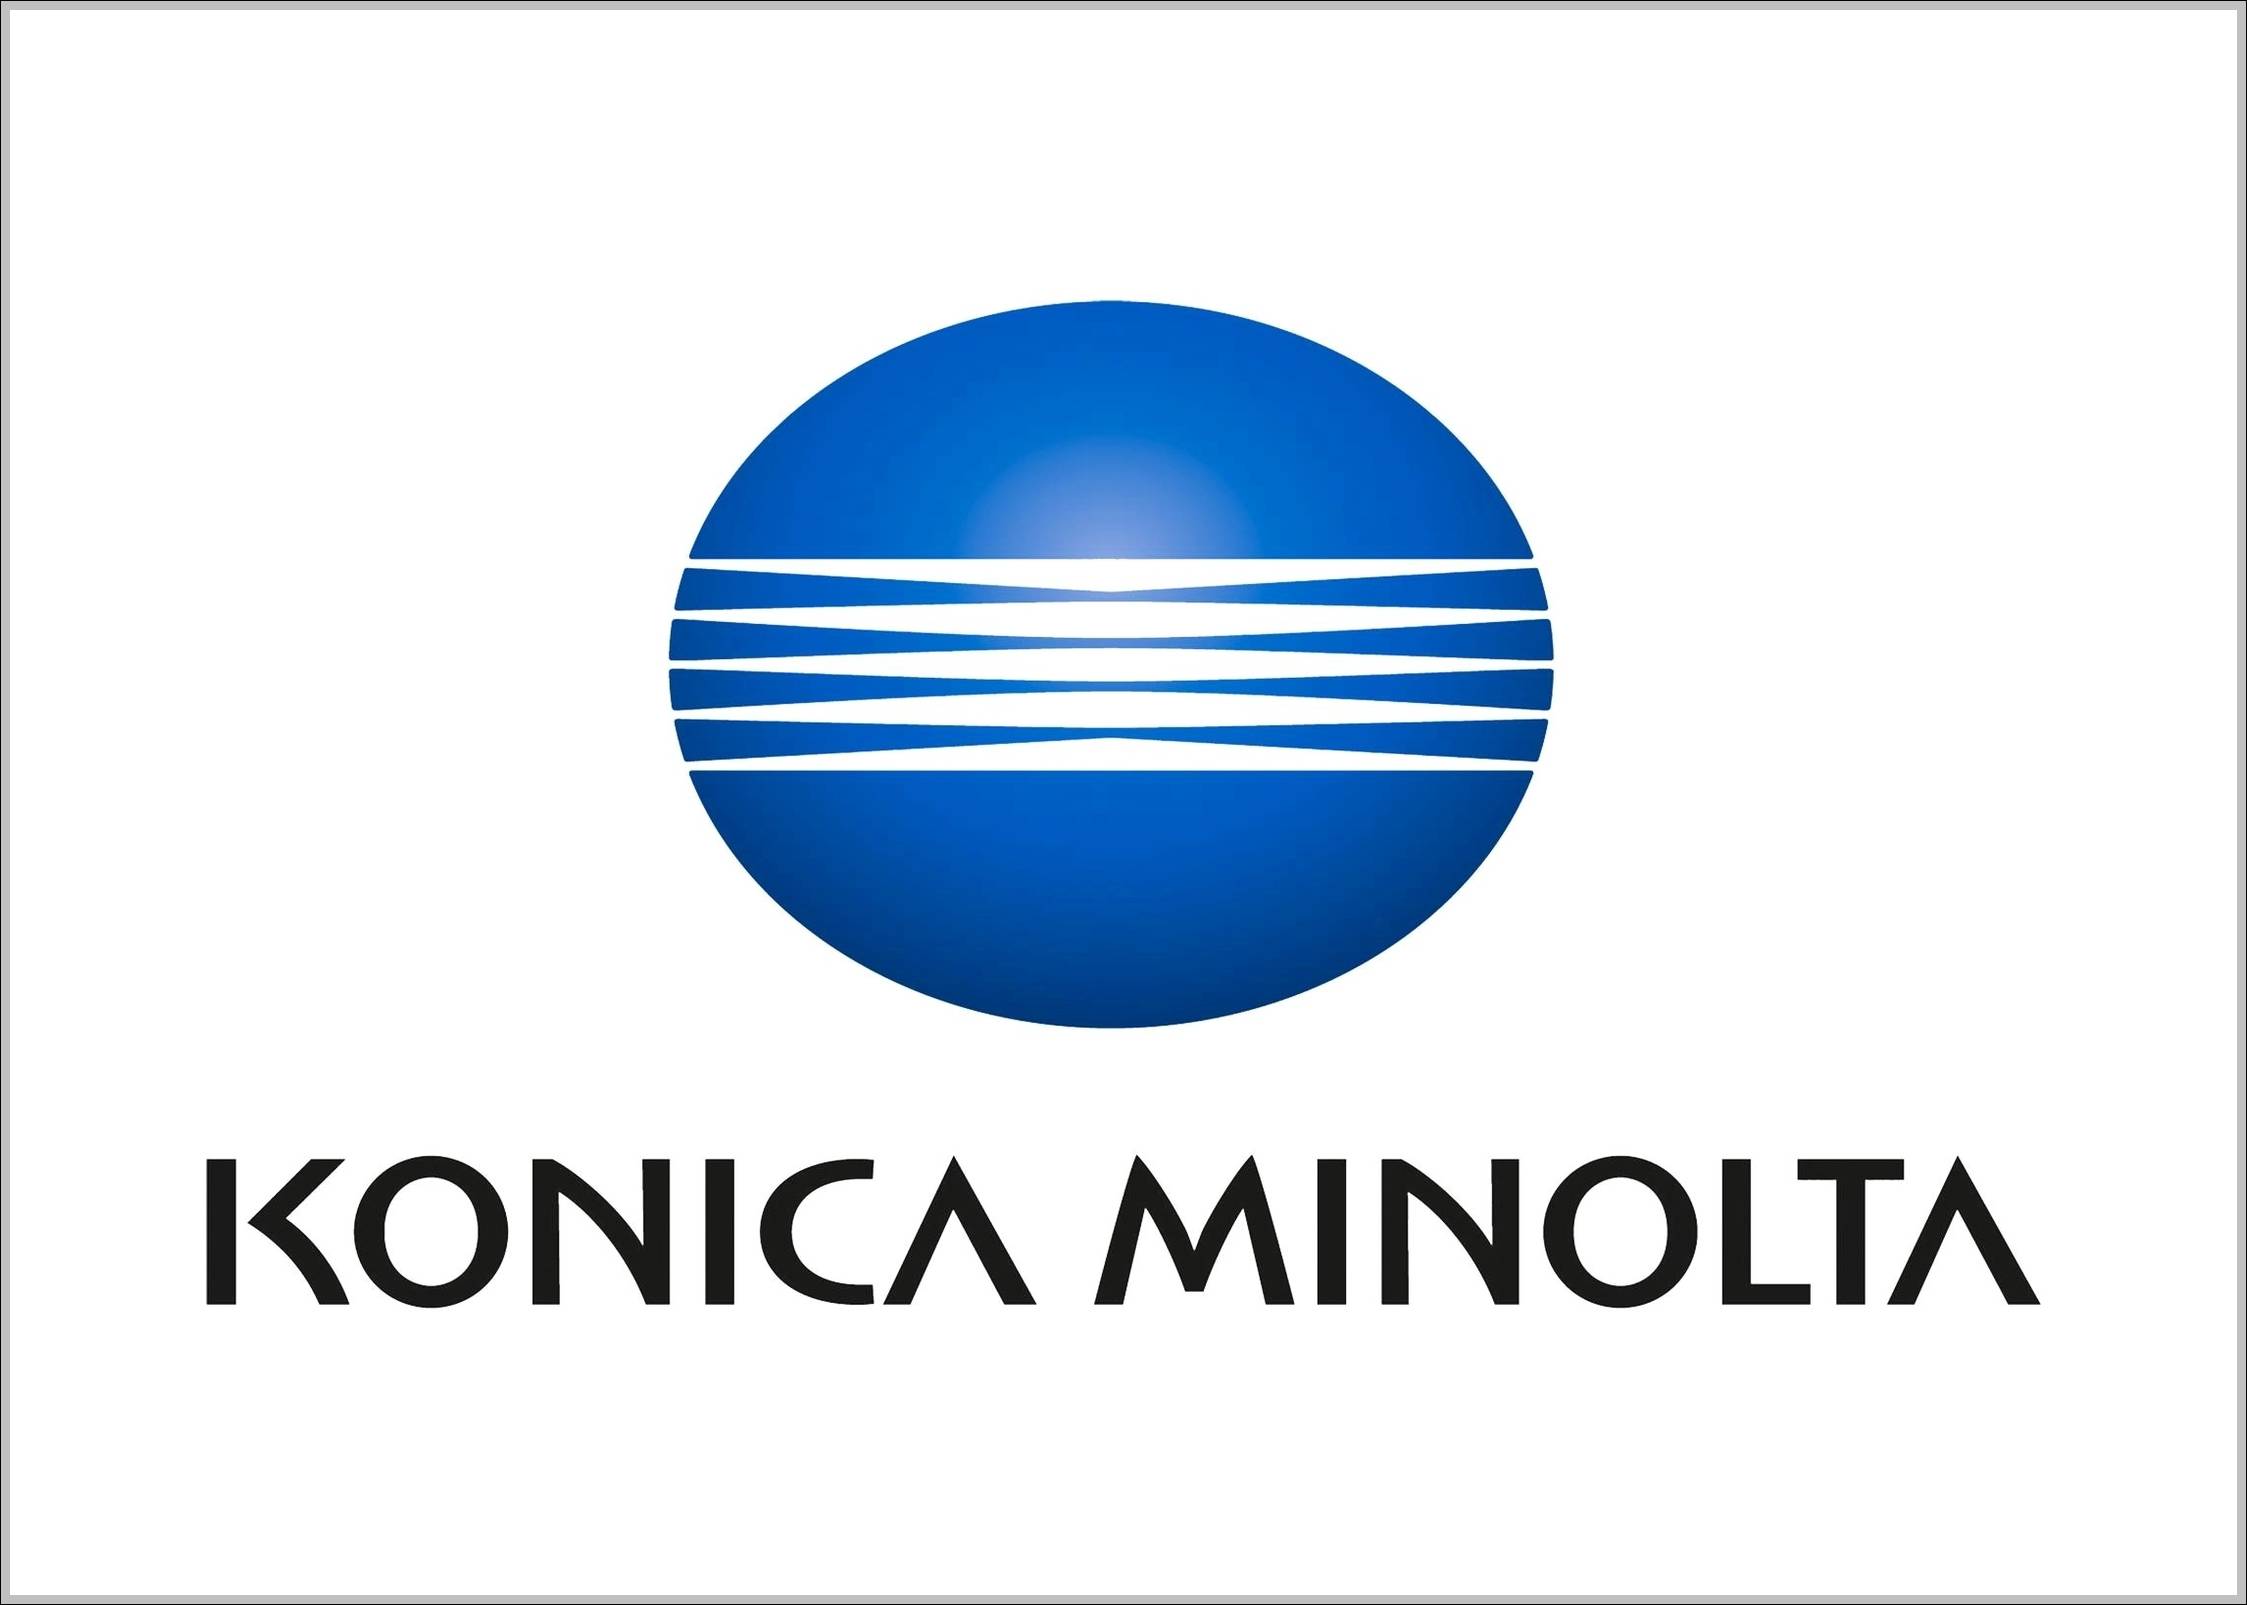 Konica Minolta logo and sign